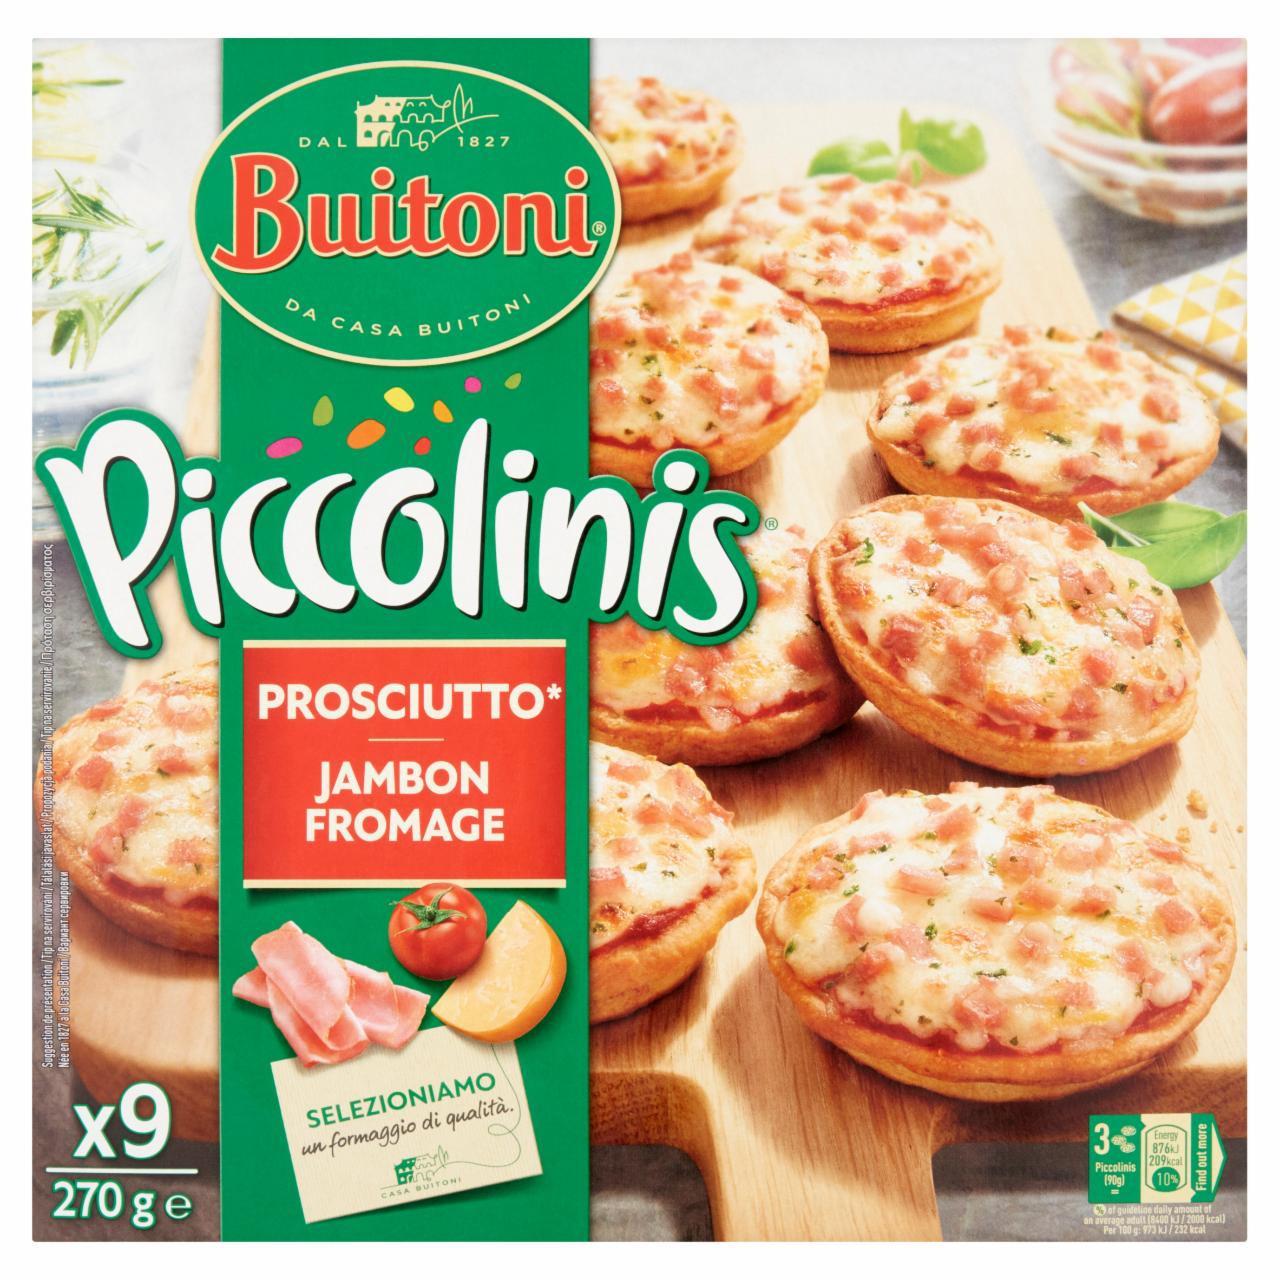 Képek - Buitoni Piccolinis Prosciutto gyorsfagyasztott mini pizza 9 db 270 g